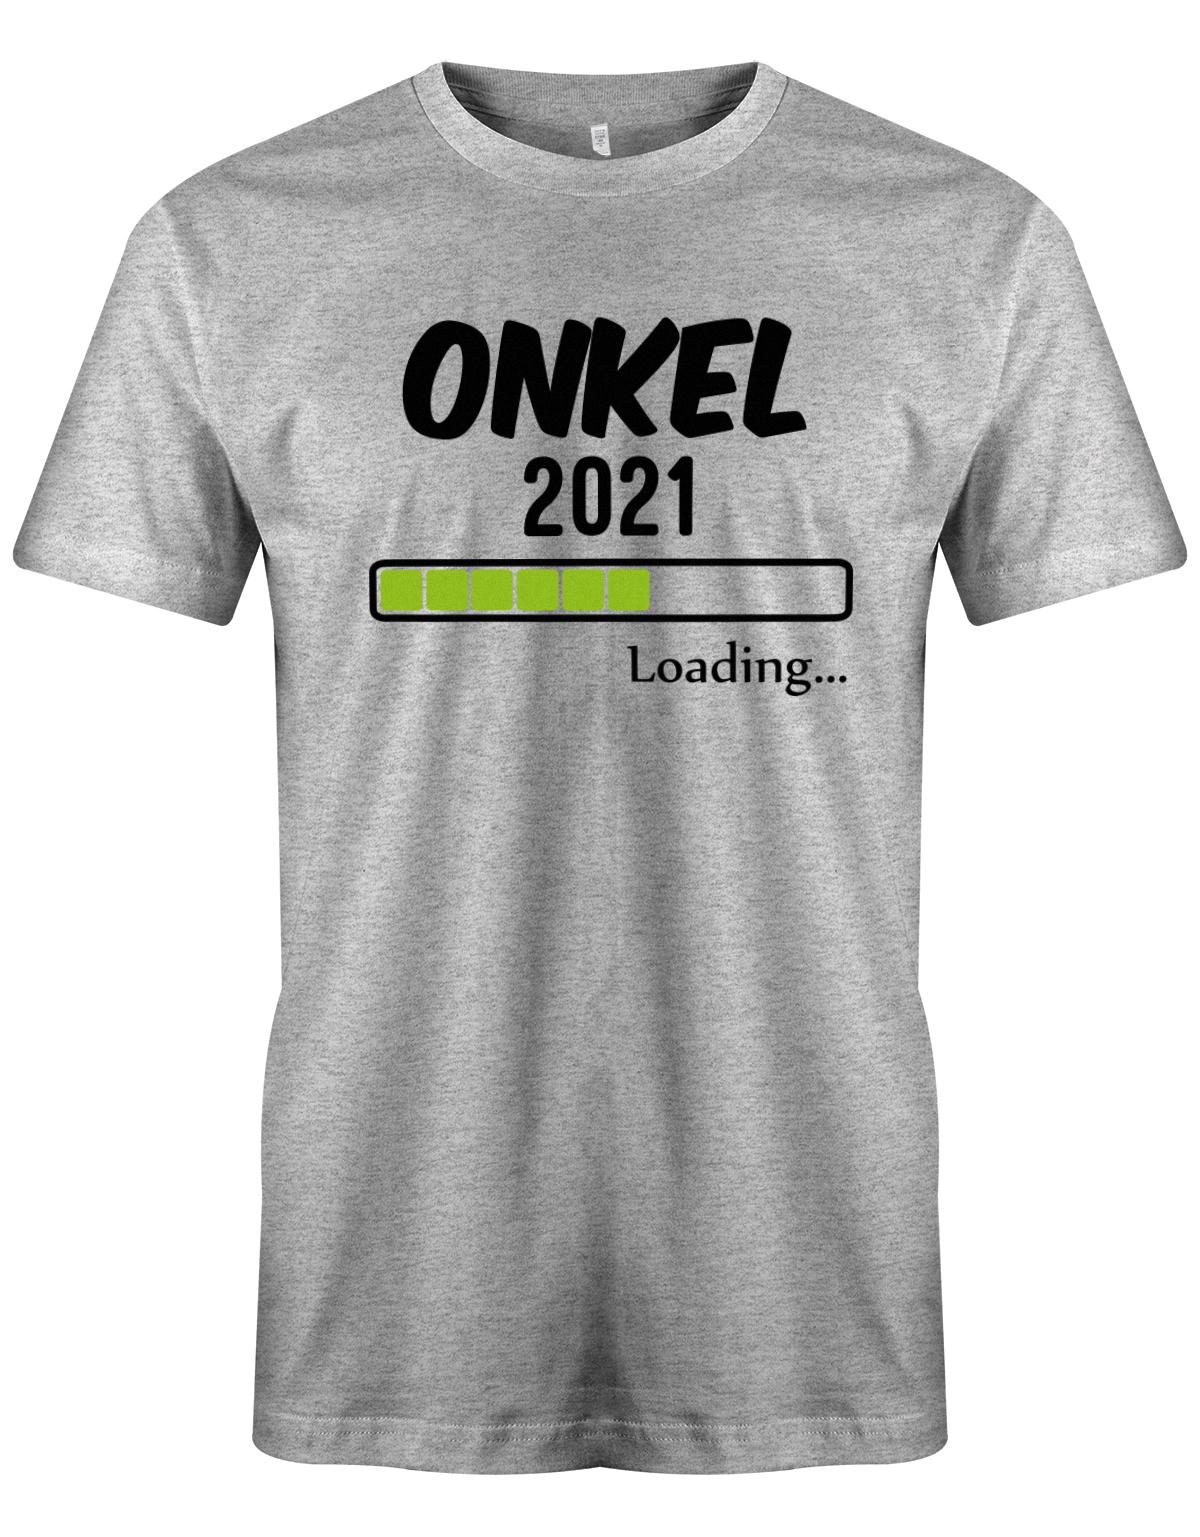 Onkel-loading-2021-Herren-Shirt-Grau